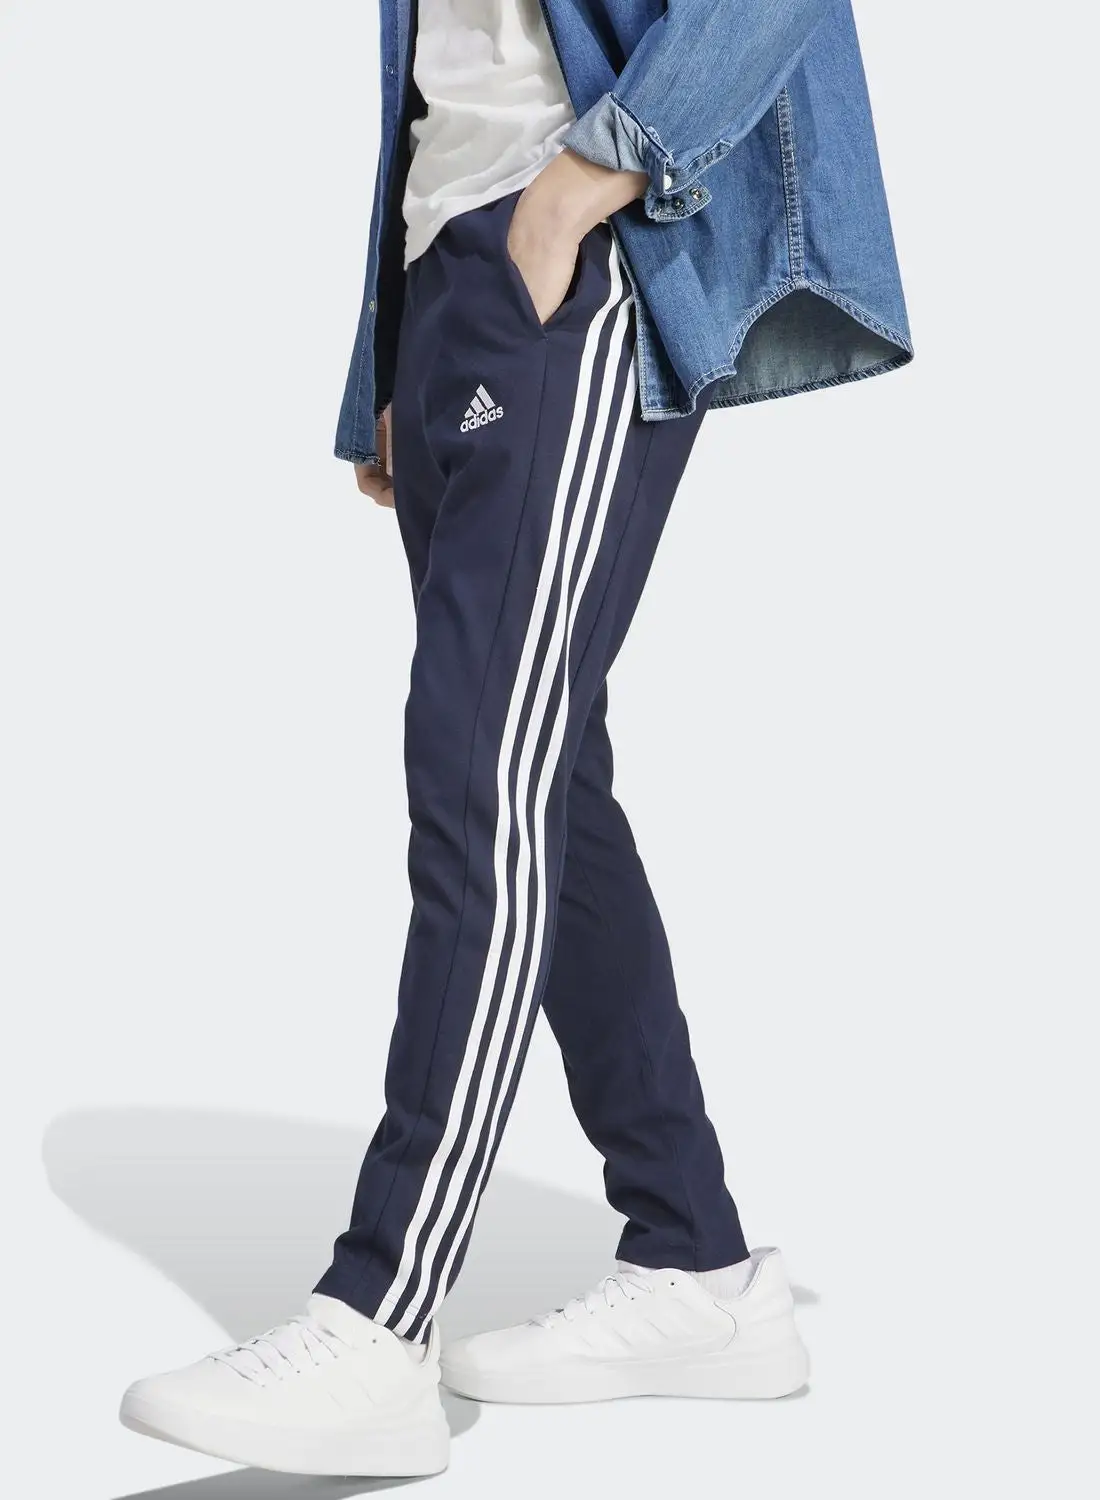 Adidas 3 Stripe Sweatpants